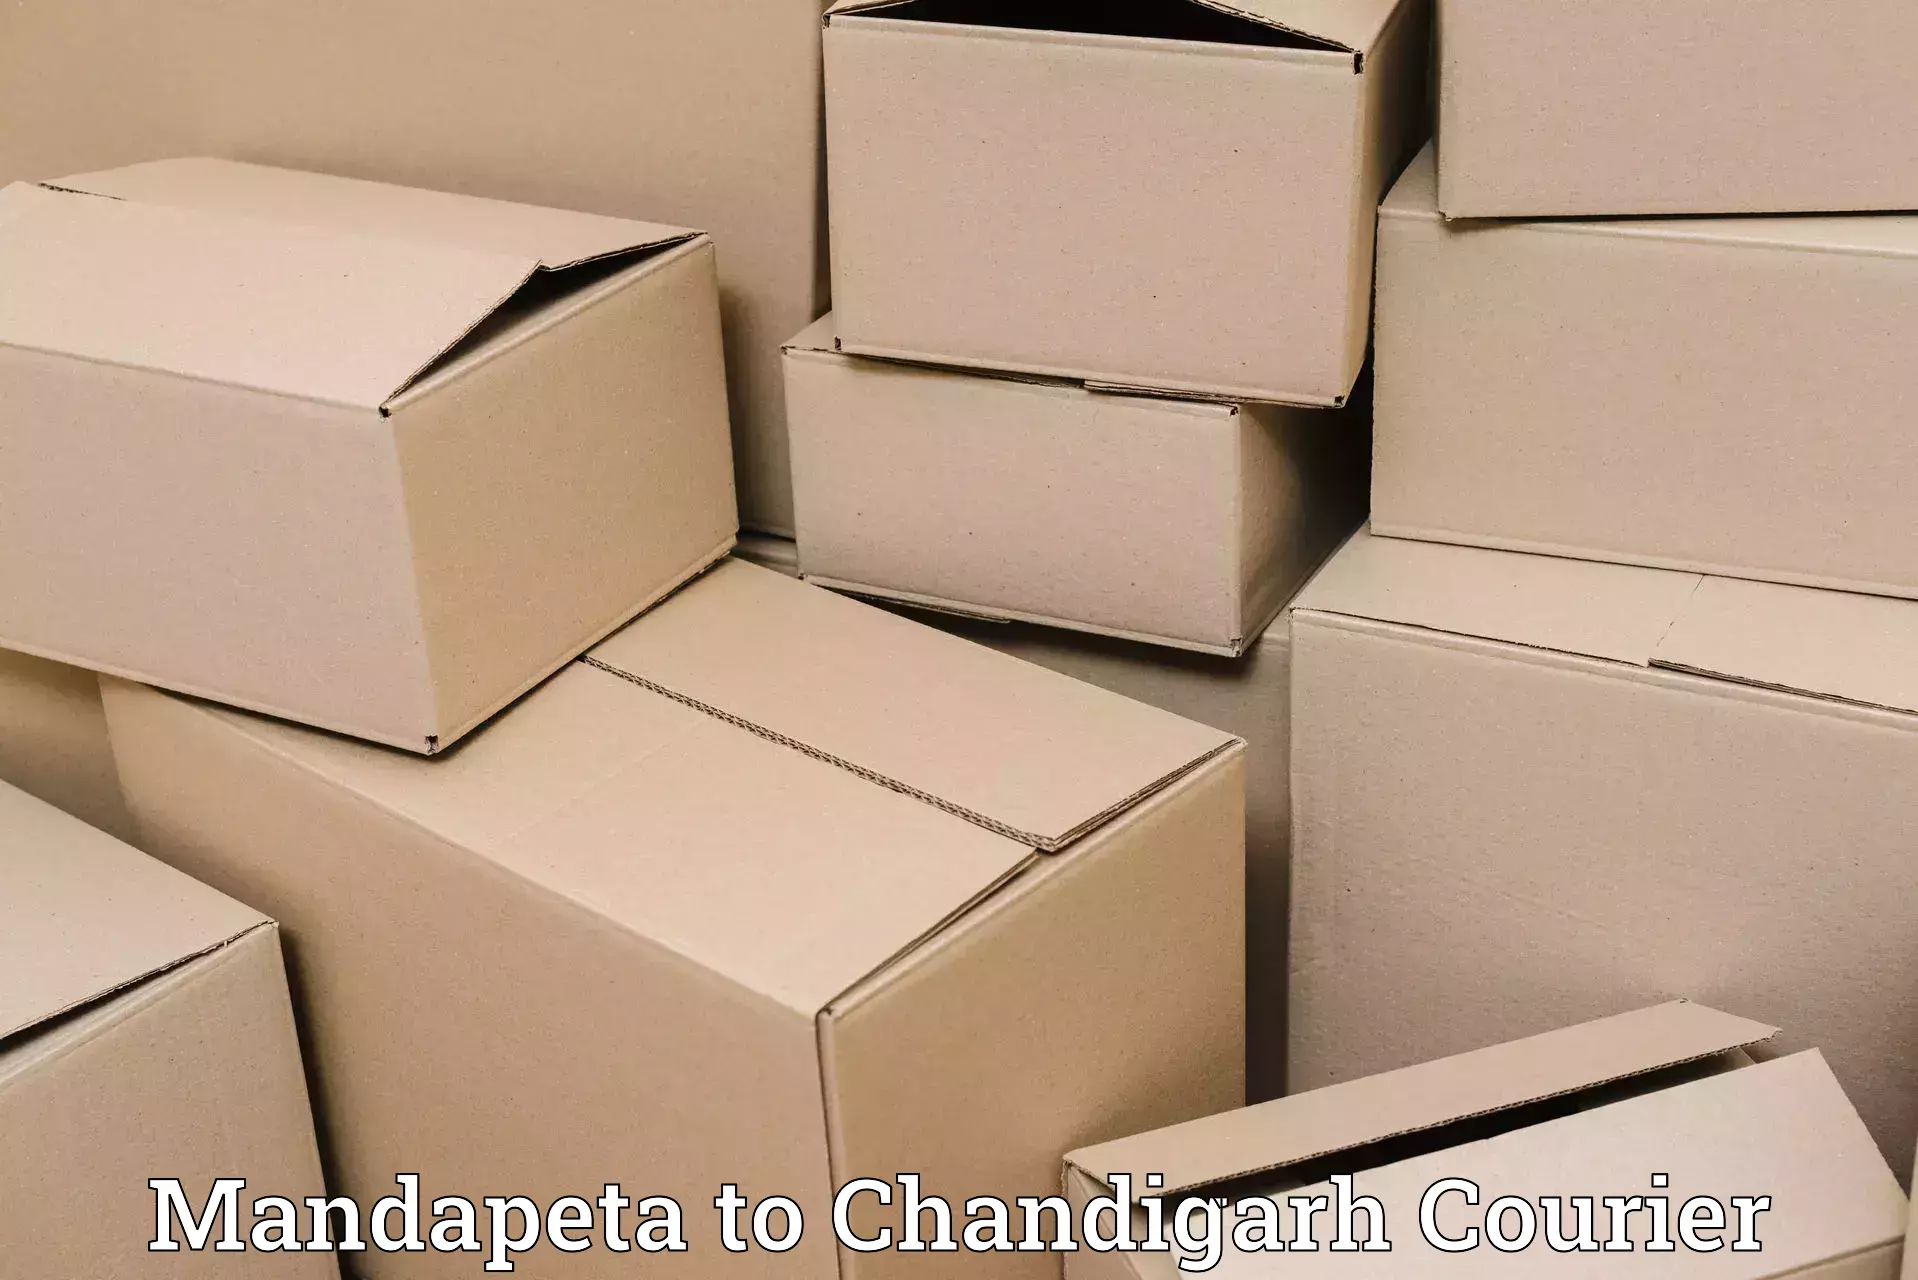 Urgent courier needs Mandapeta to Chandigarh